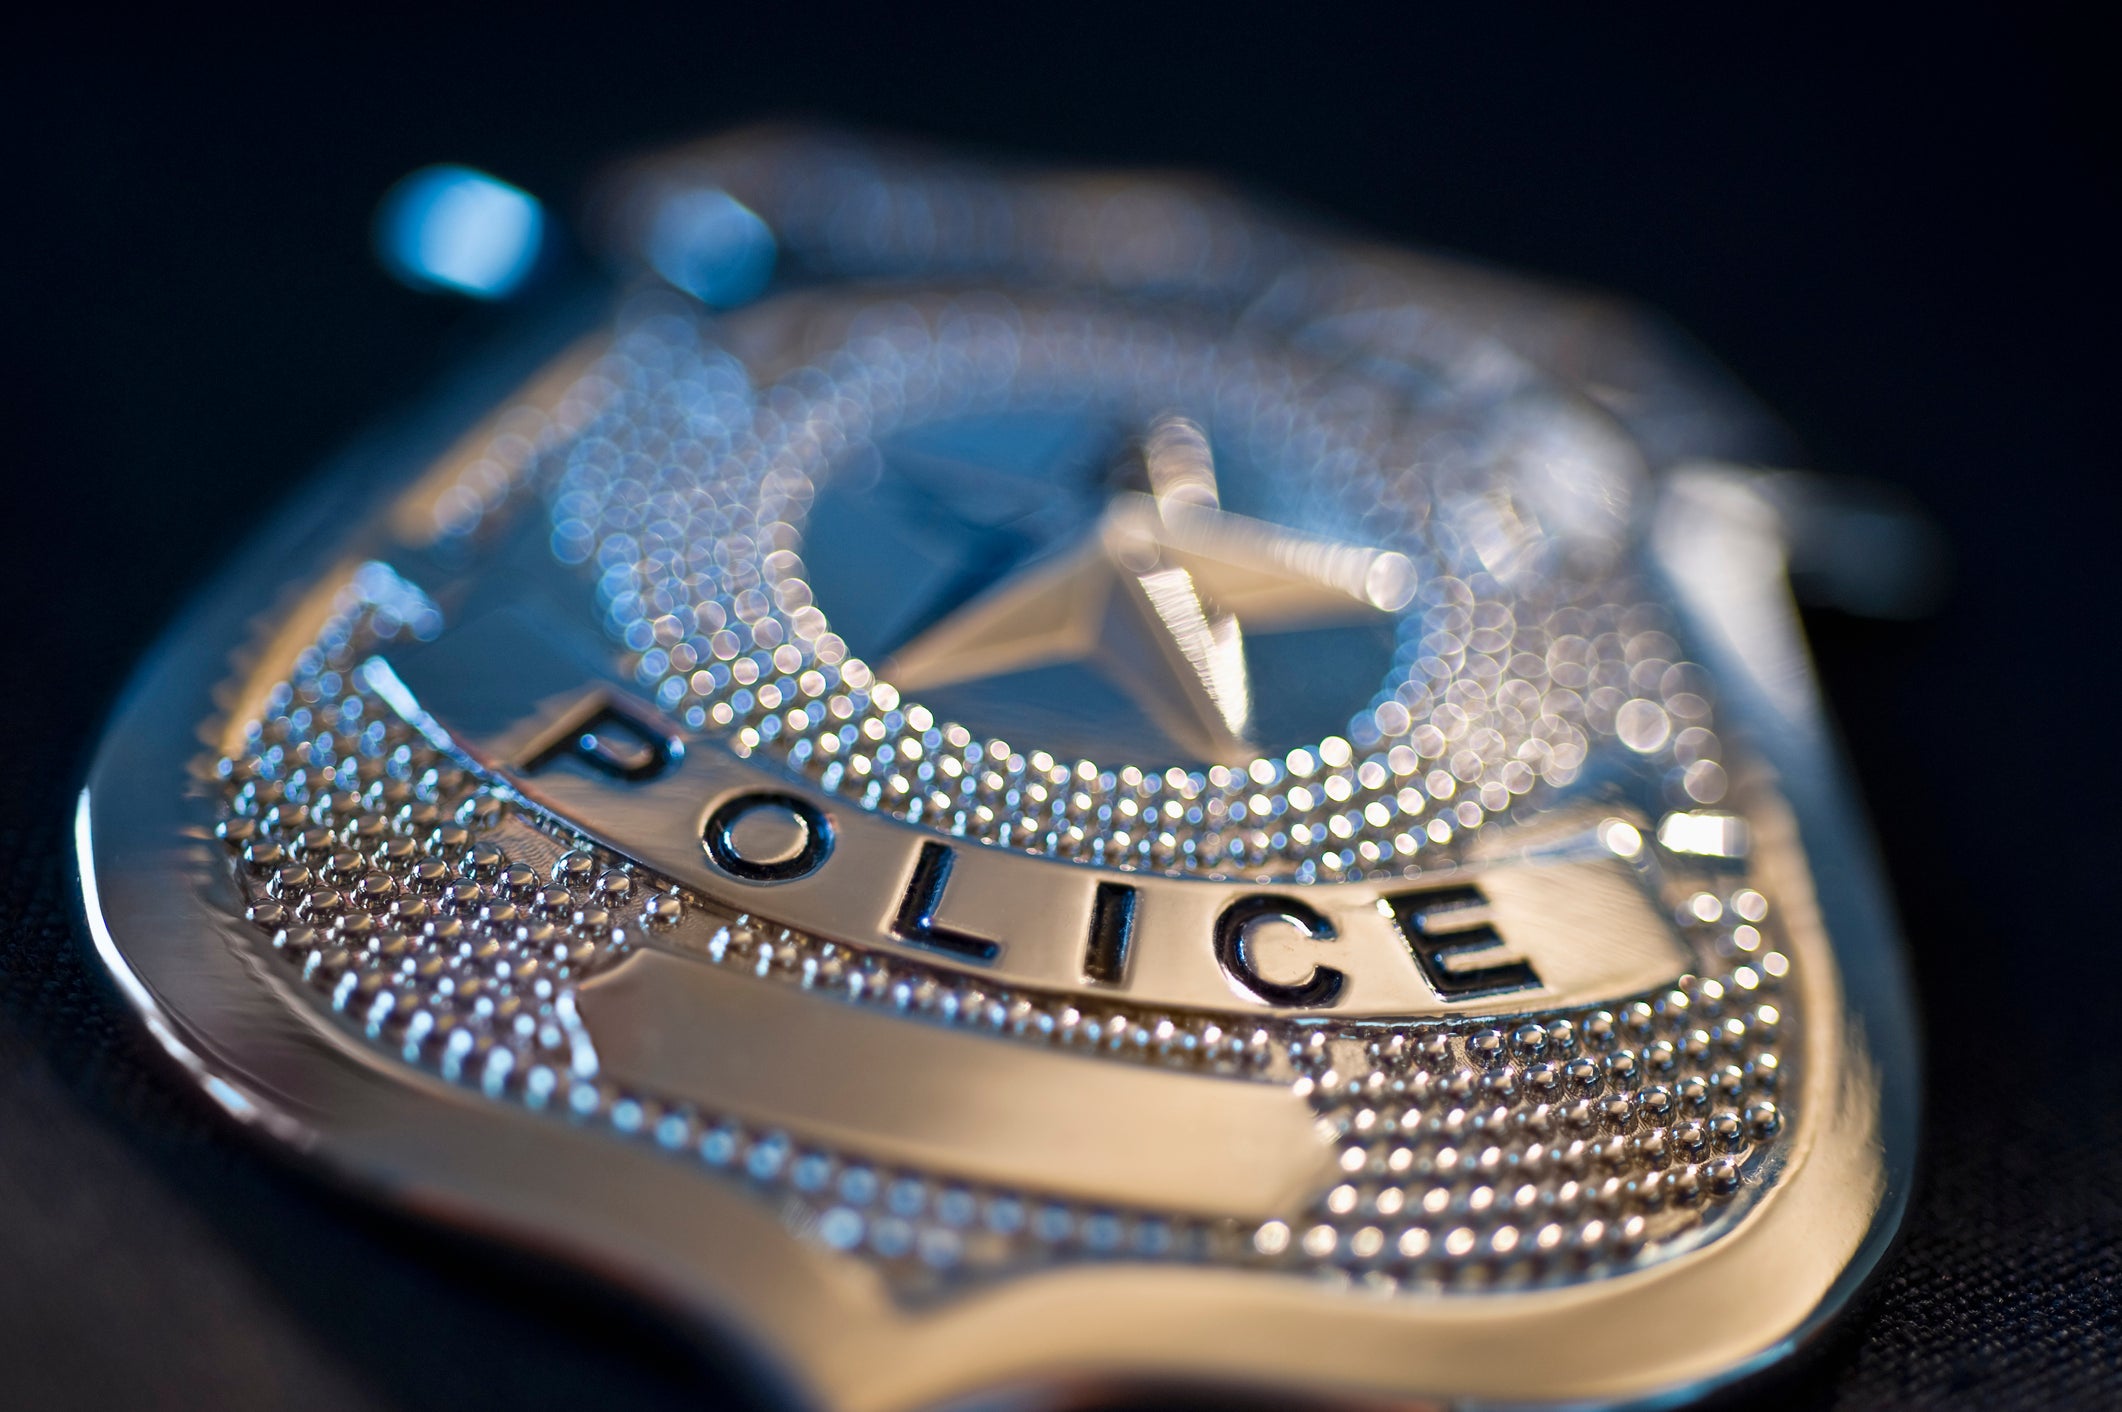 Black Women File Federal Lawsuit Against Former Kansas City Police Officers Alleging Rape, Intimidation